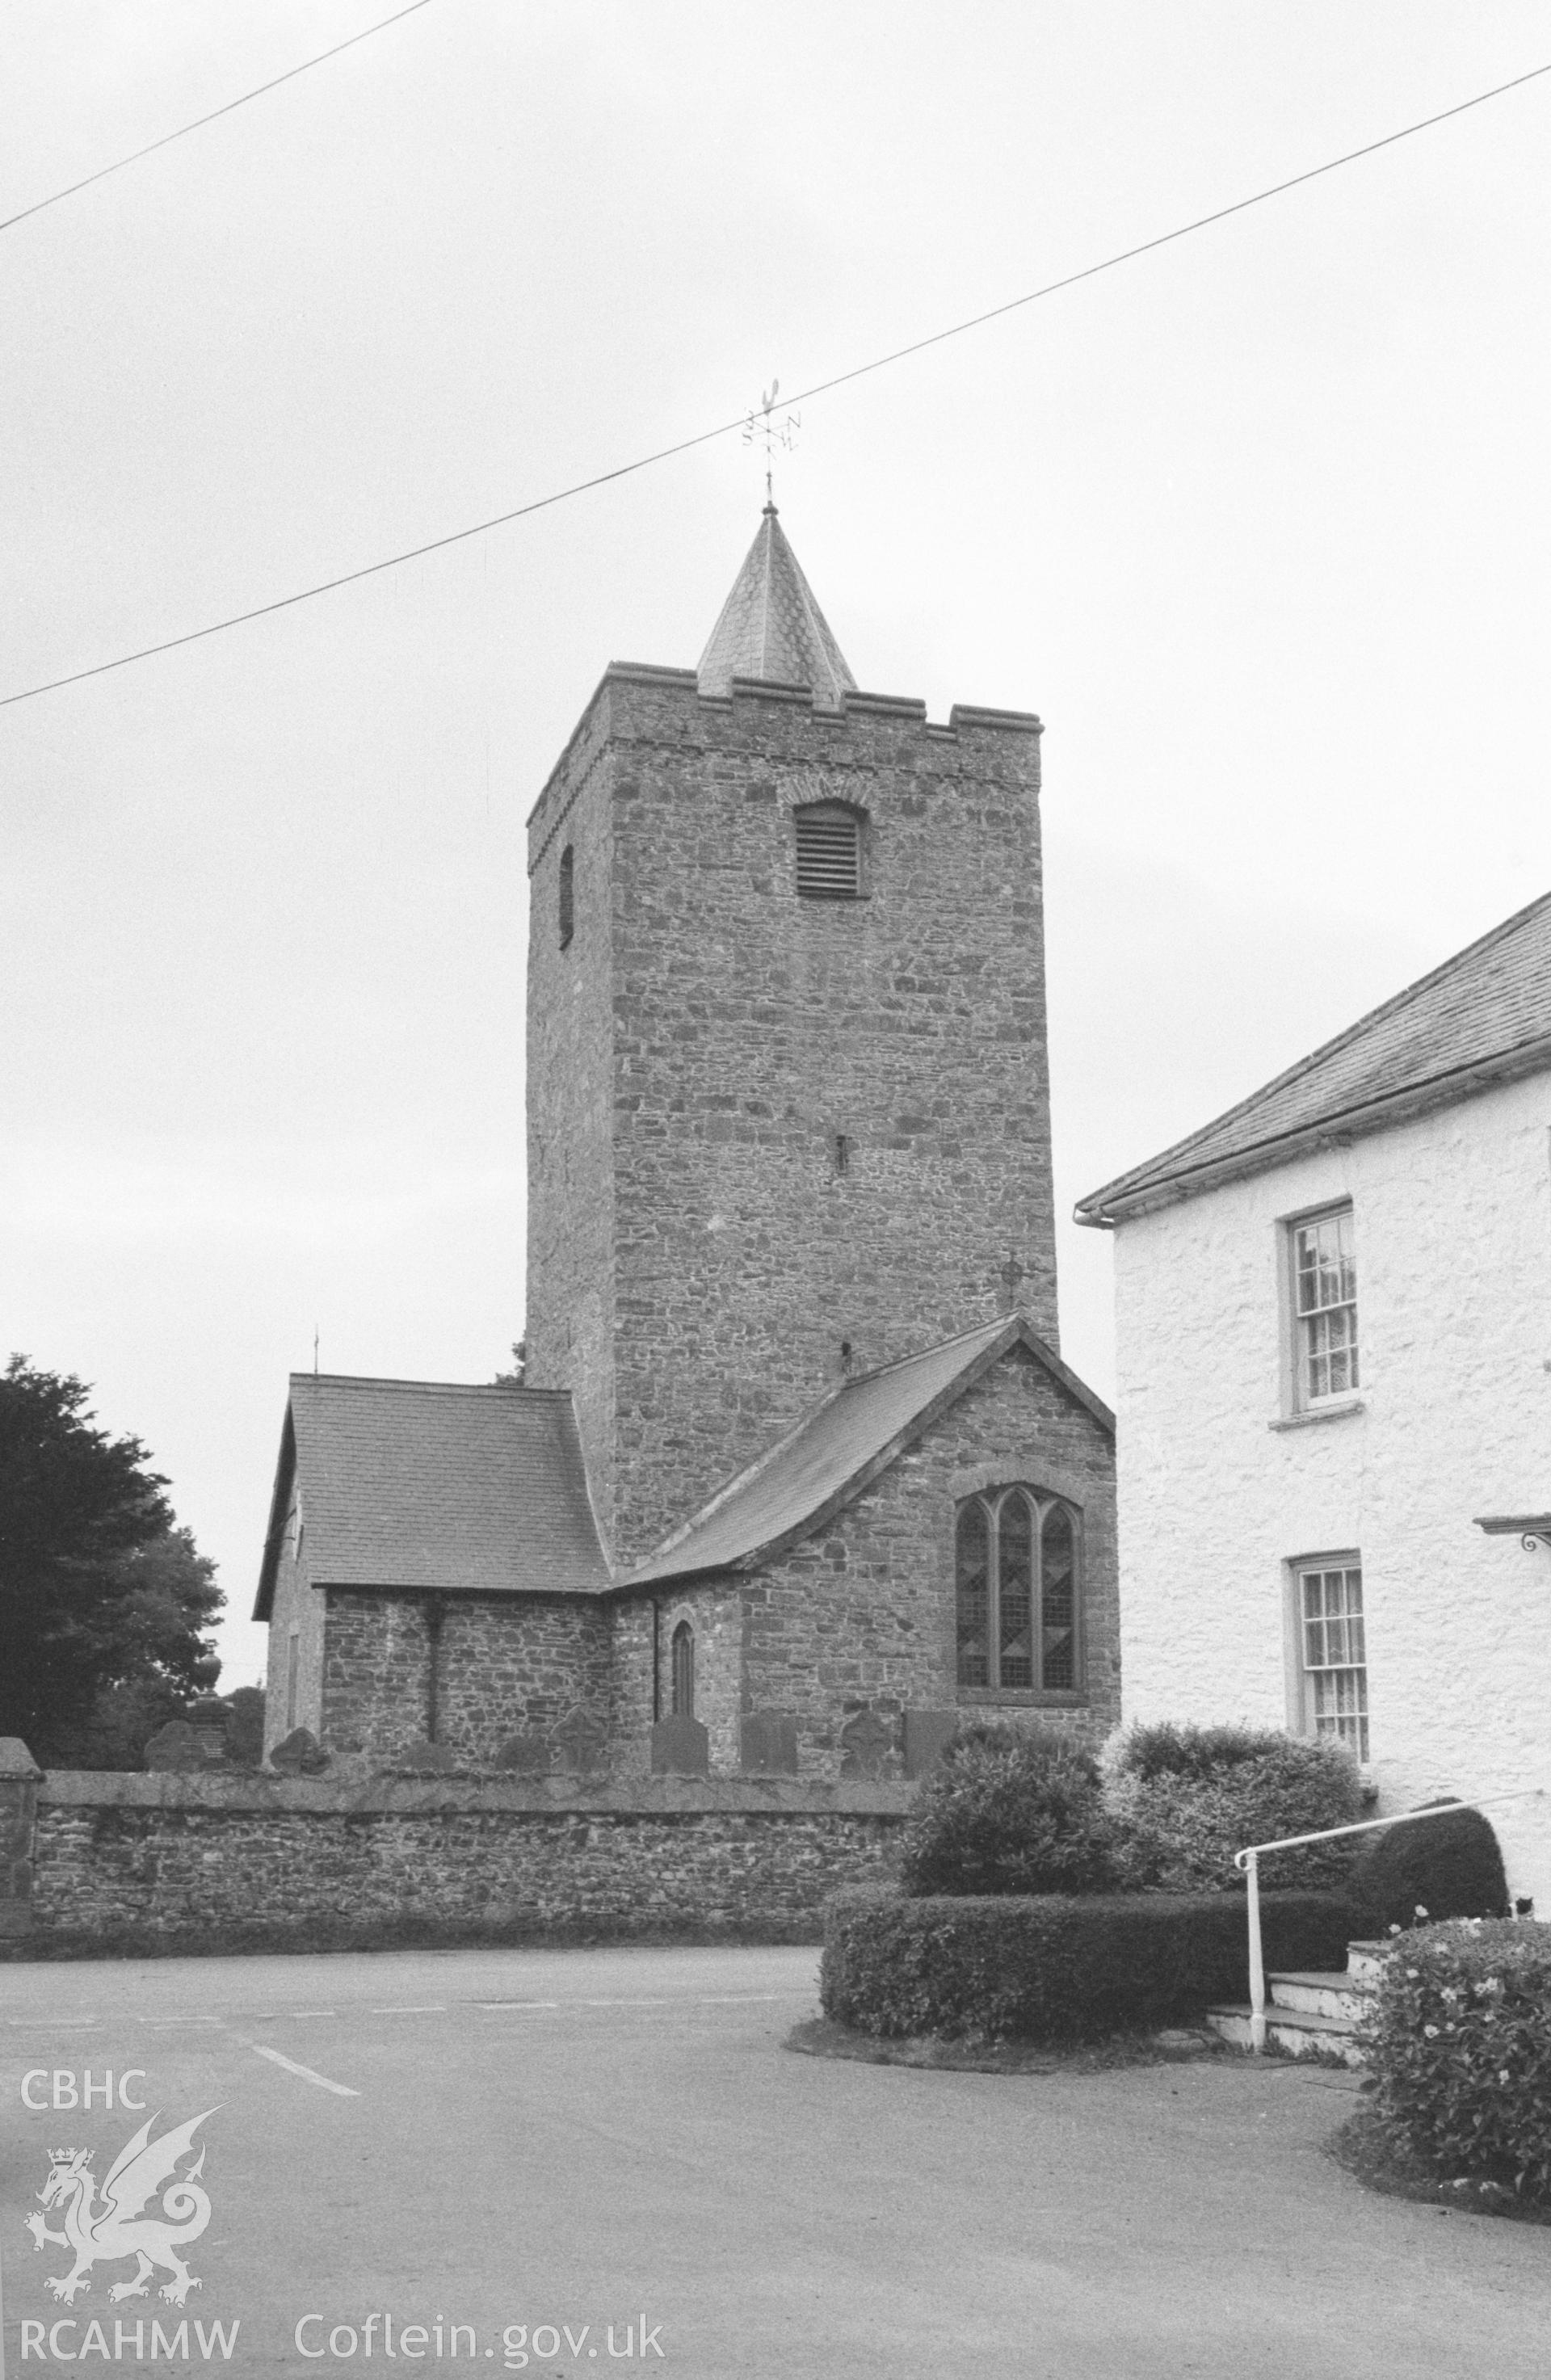 Digital copy of a black and white negative showing view of St Michael's Church, Llanfihangel y Creuddyn.